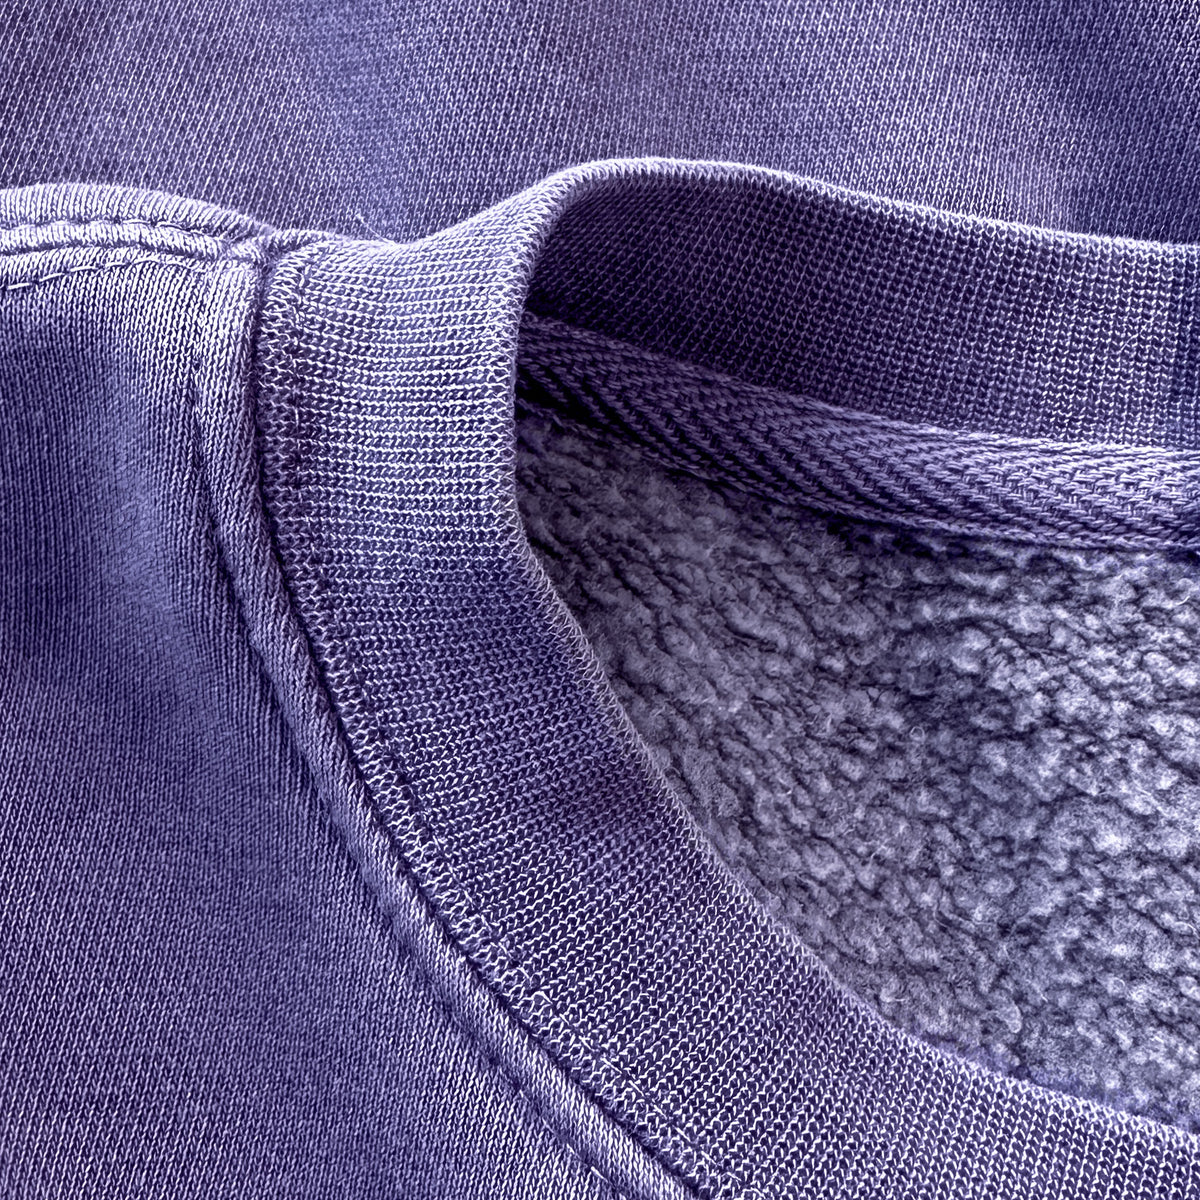 Blue Jay - Cyanocitta cristata - Unisex Pigment Dyed Crew Sweatshirt